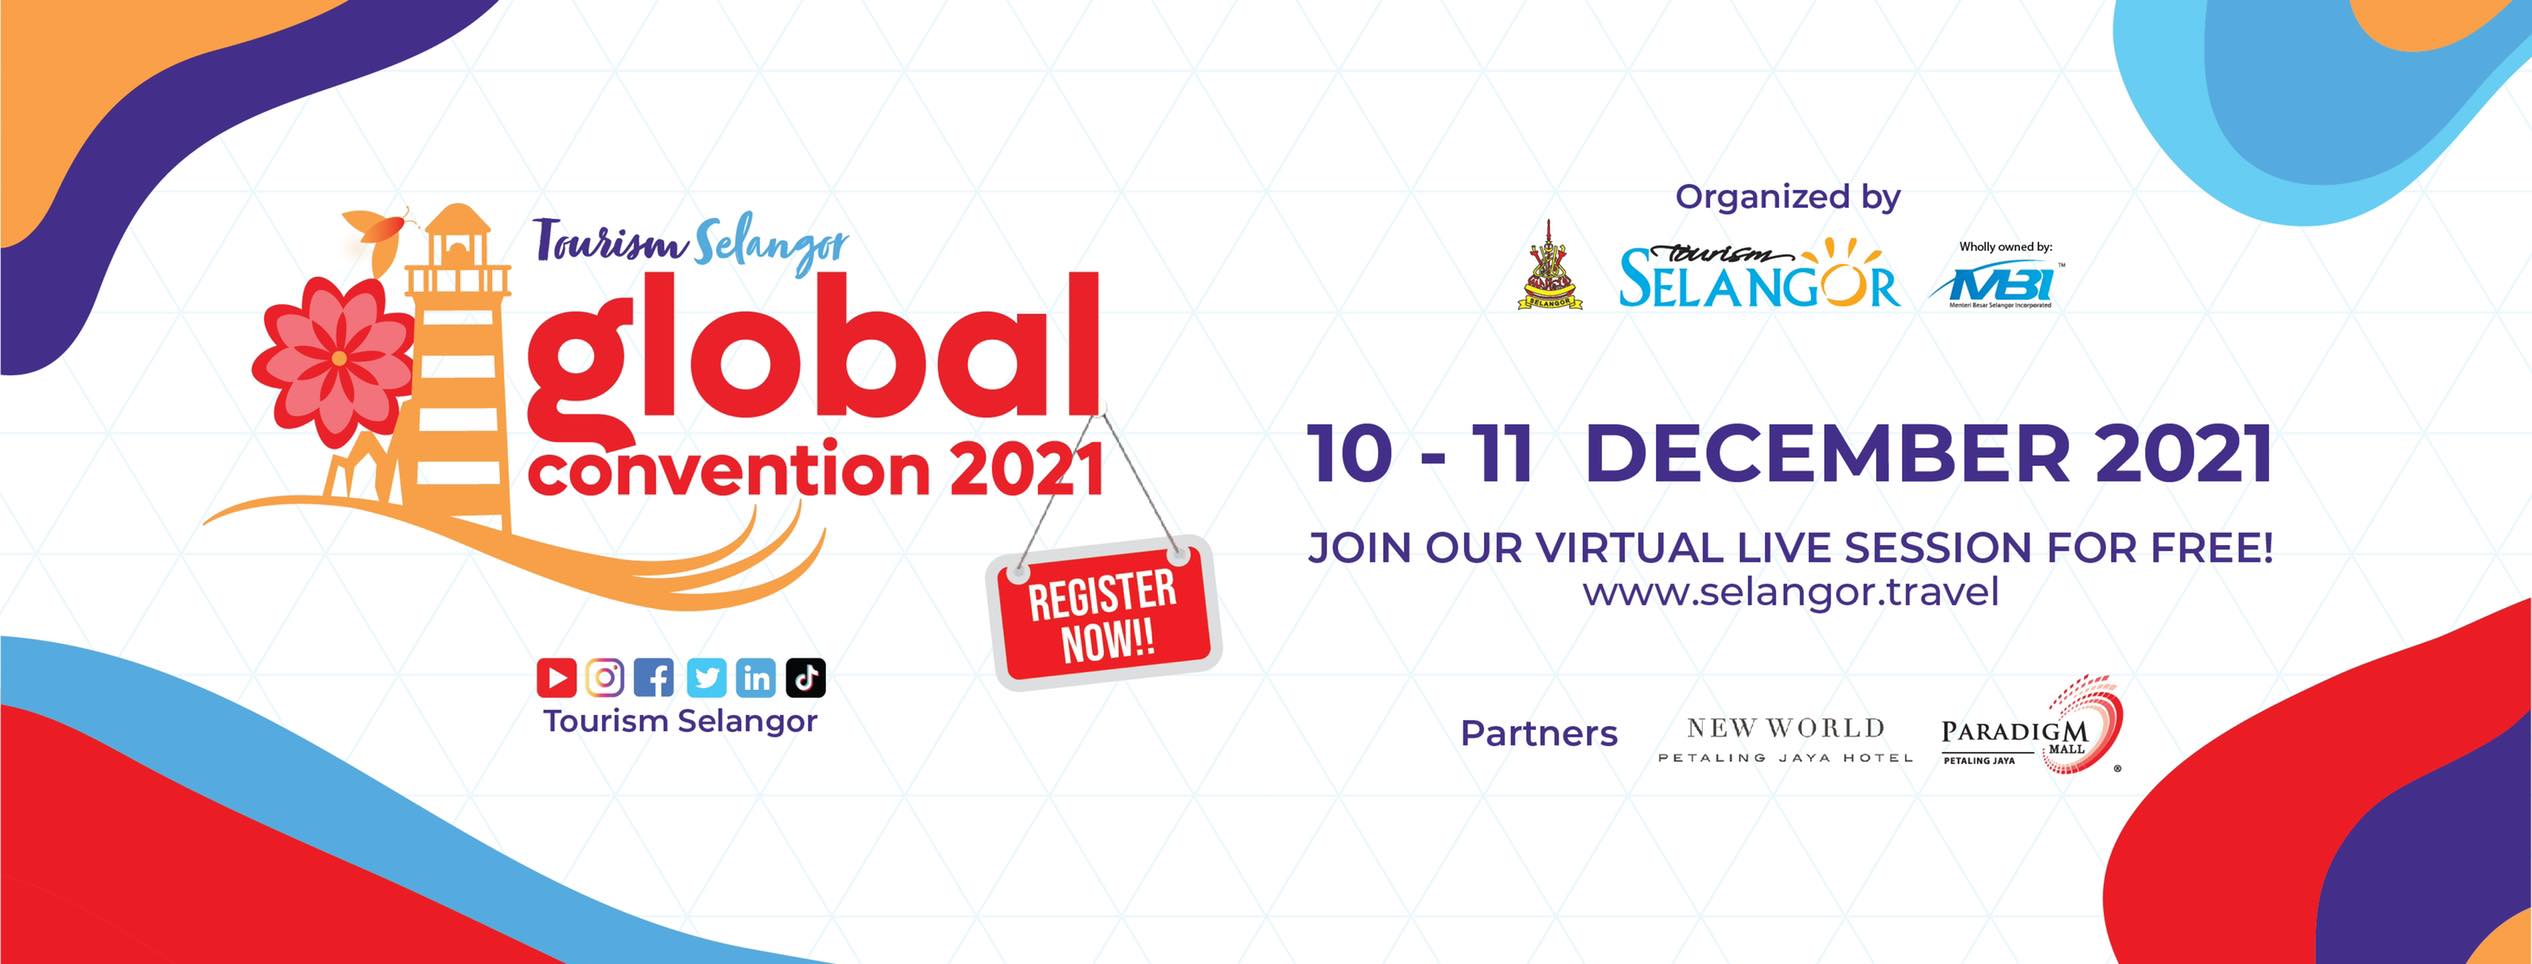 Tourism Selangor Global Convention 2021